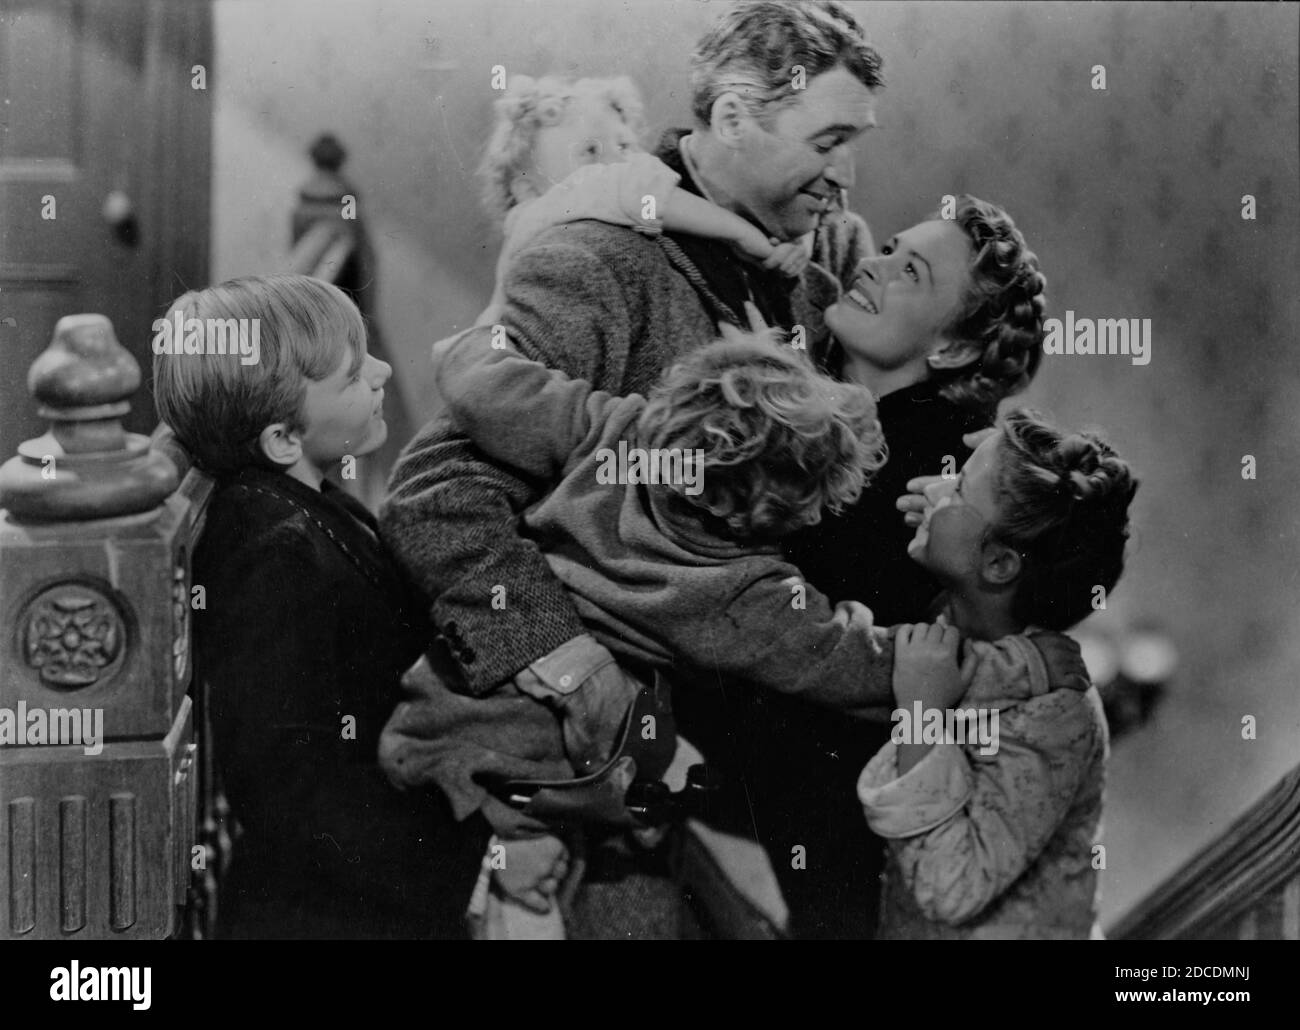 JAMES STEWART in IT'S A WONDERFUL LIFE (1946), directed by FRANK CAPRA. Credit: RKO / Album Stock Photo